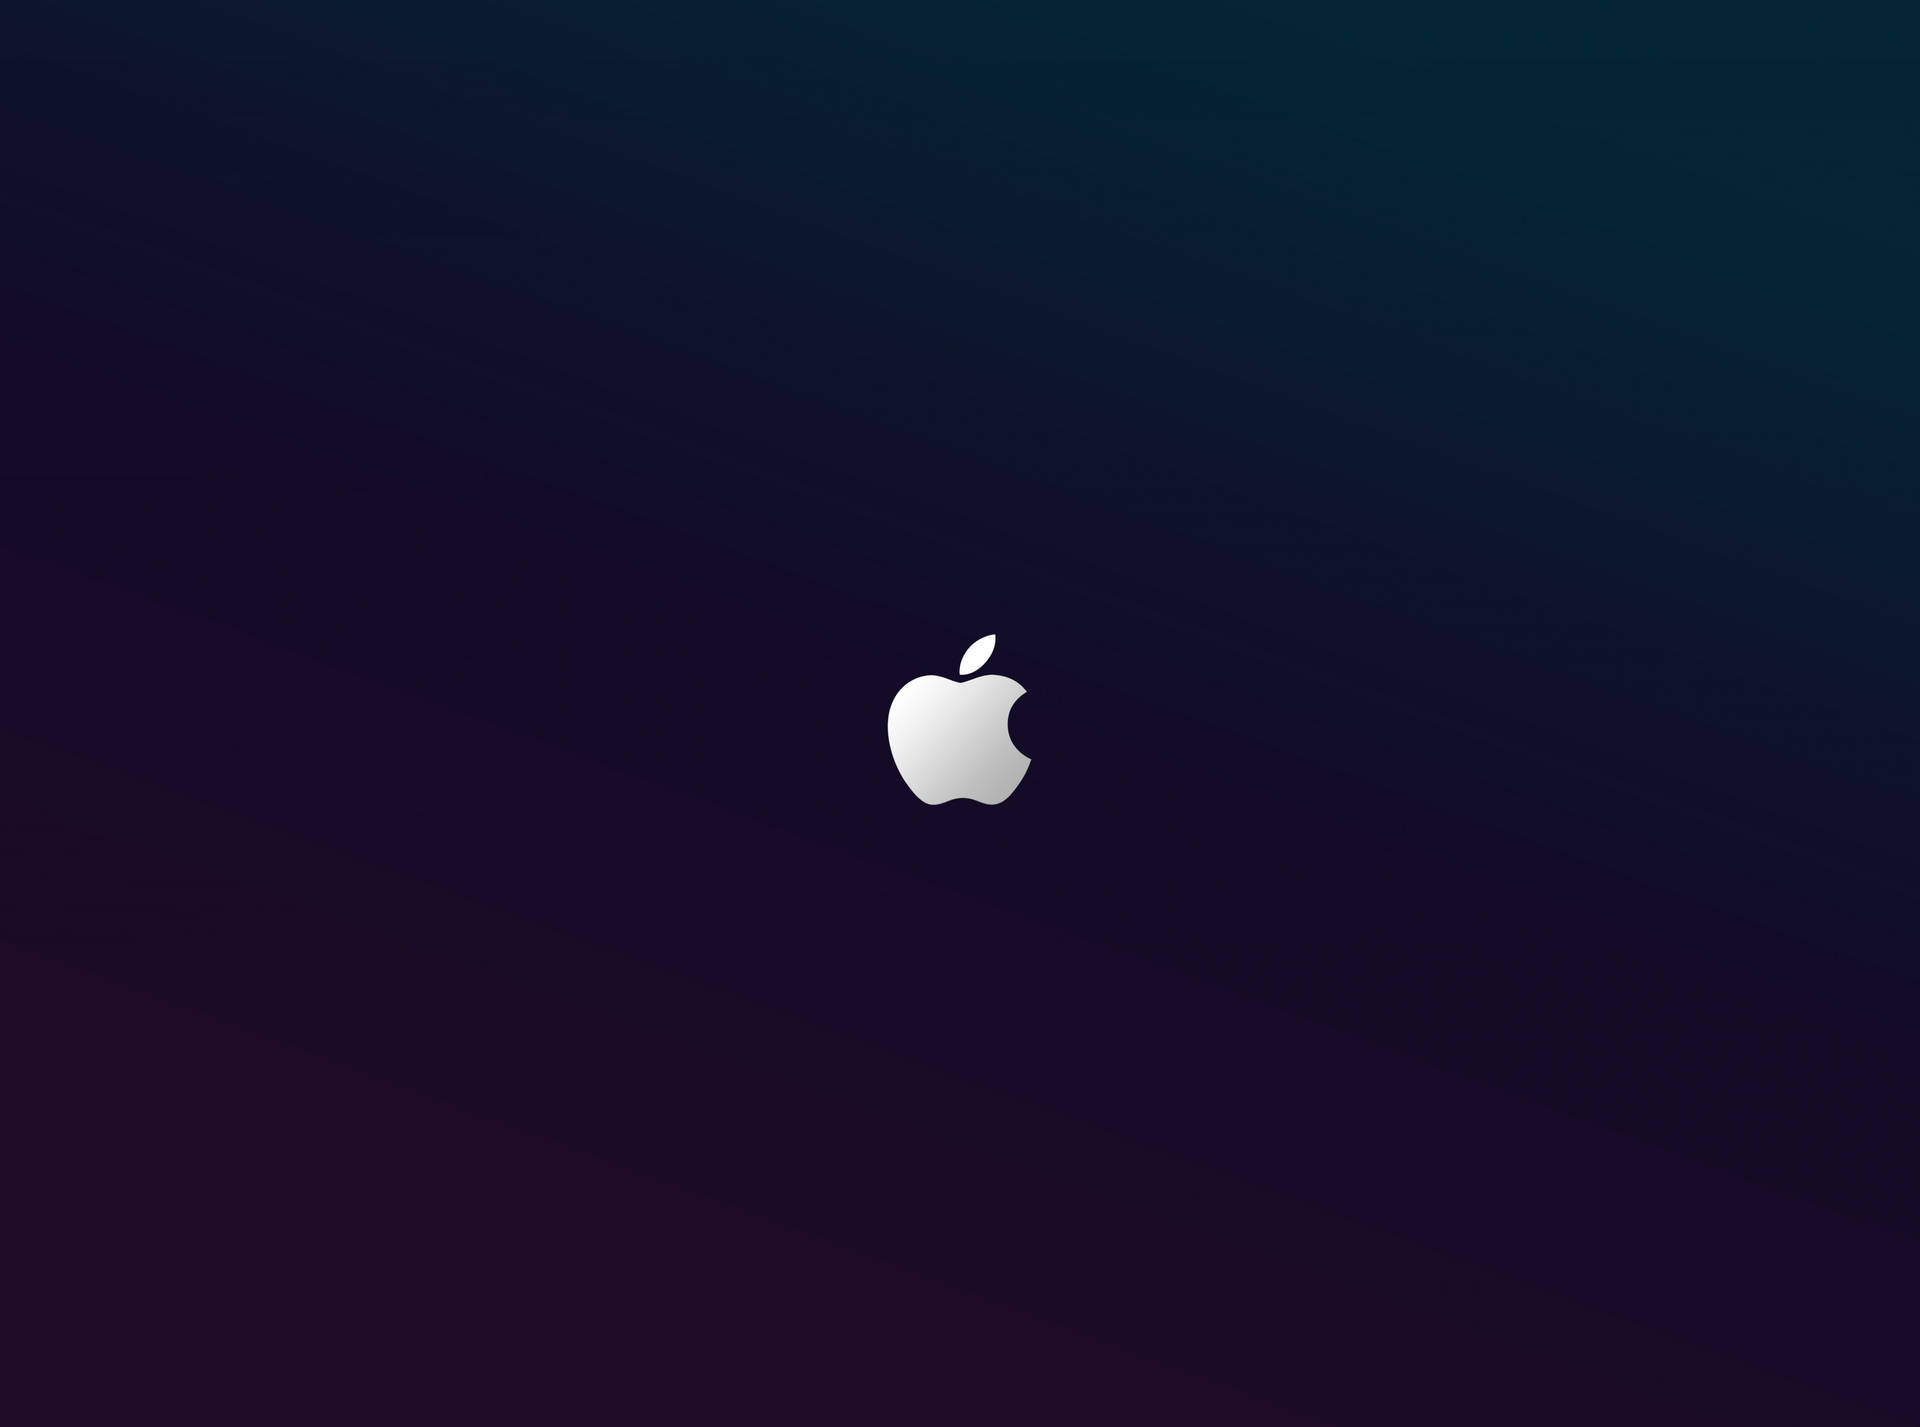 Dark Aesthetic Macbook Air Background